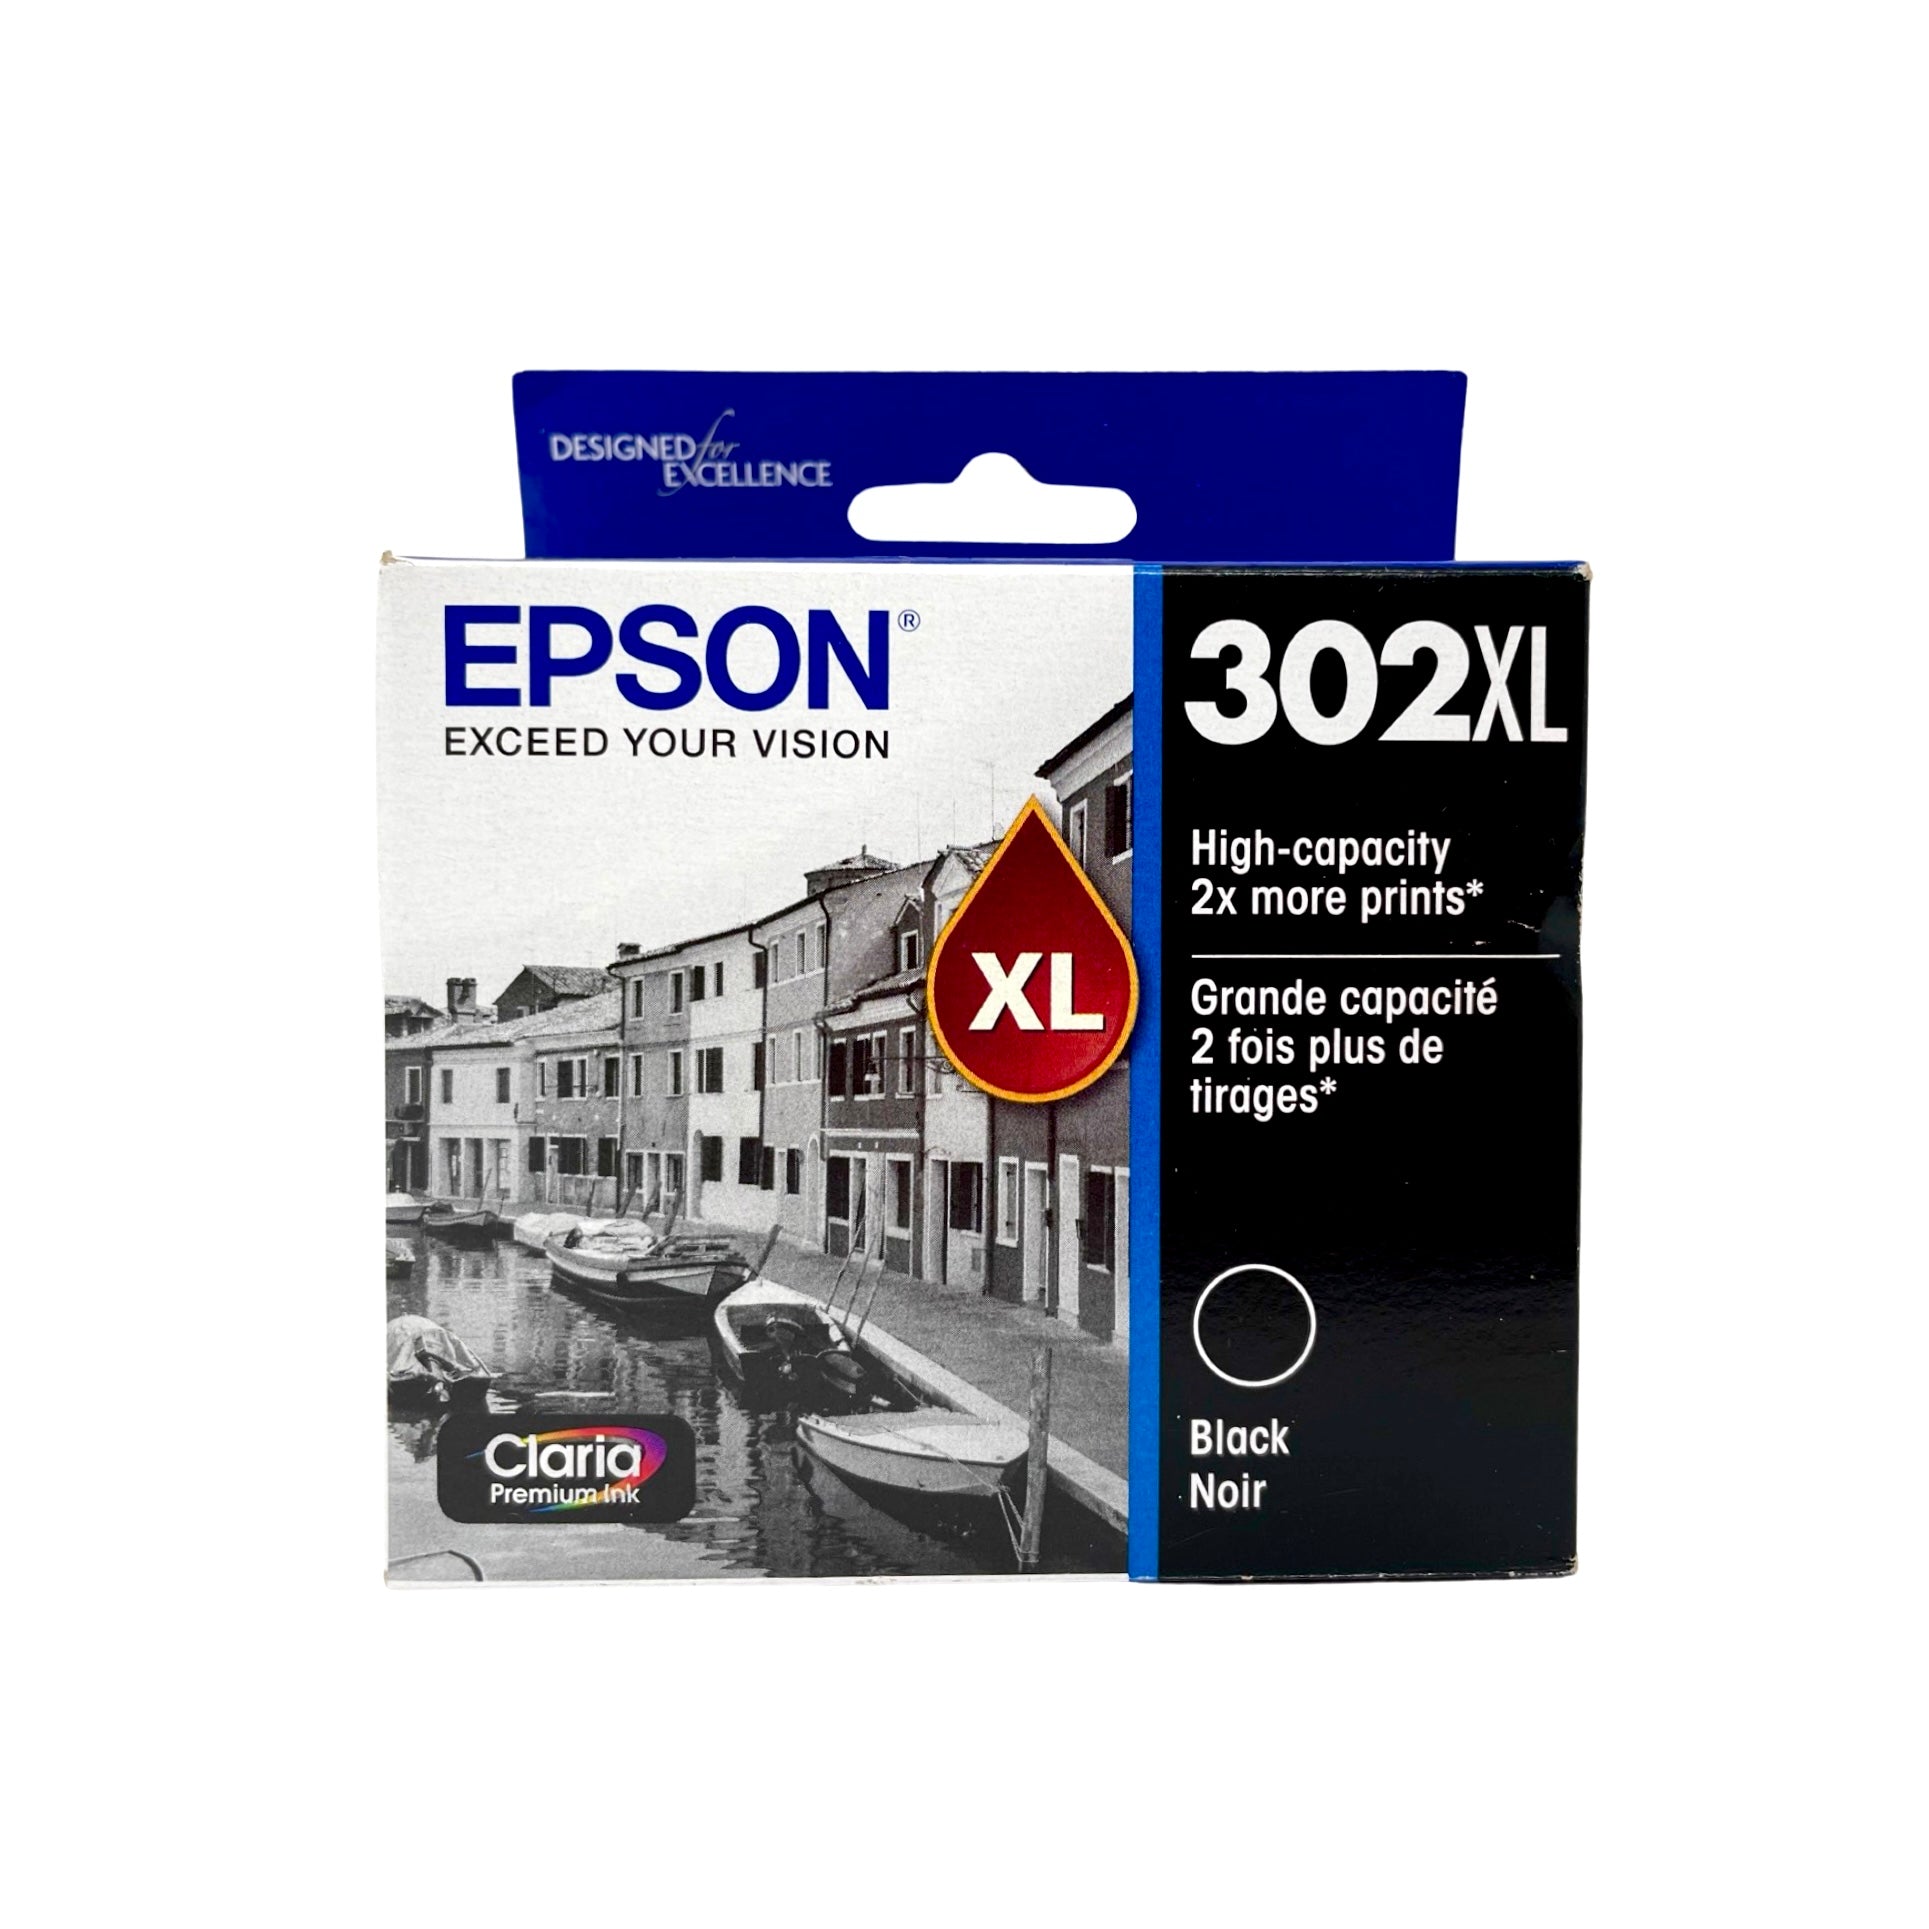 Genuine Epson 302XL Black Ink Cartridge, High Yield (T302XL020-S)